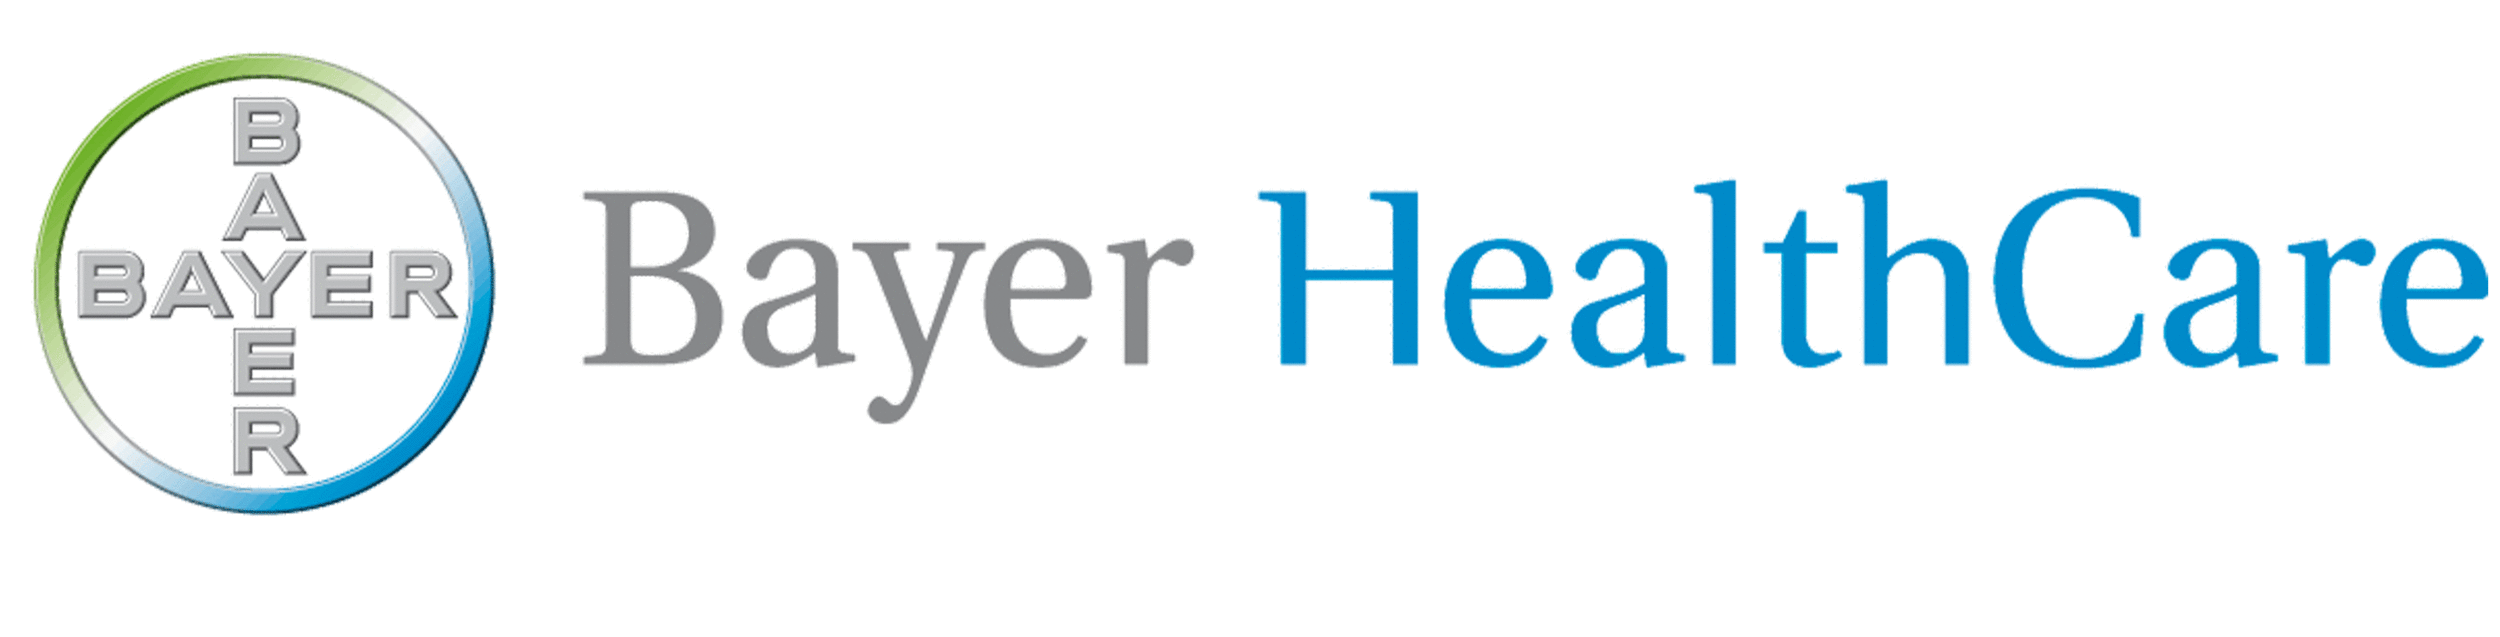 bayer-healthcare-logo_1.gif